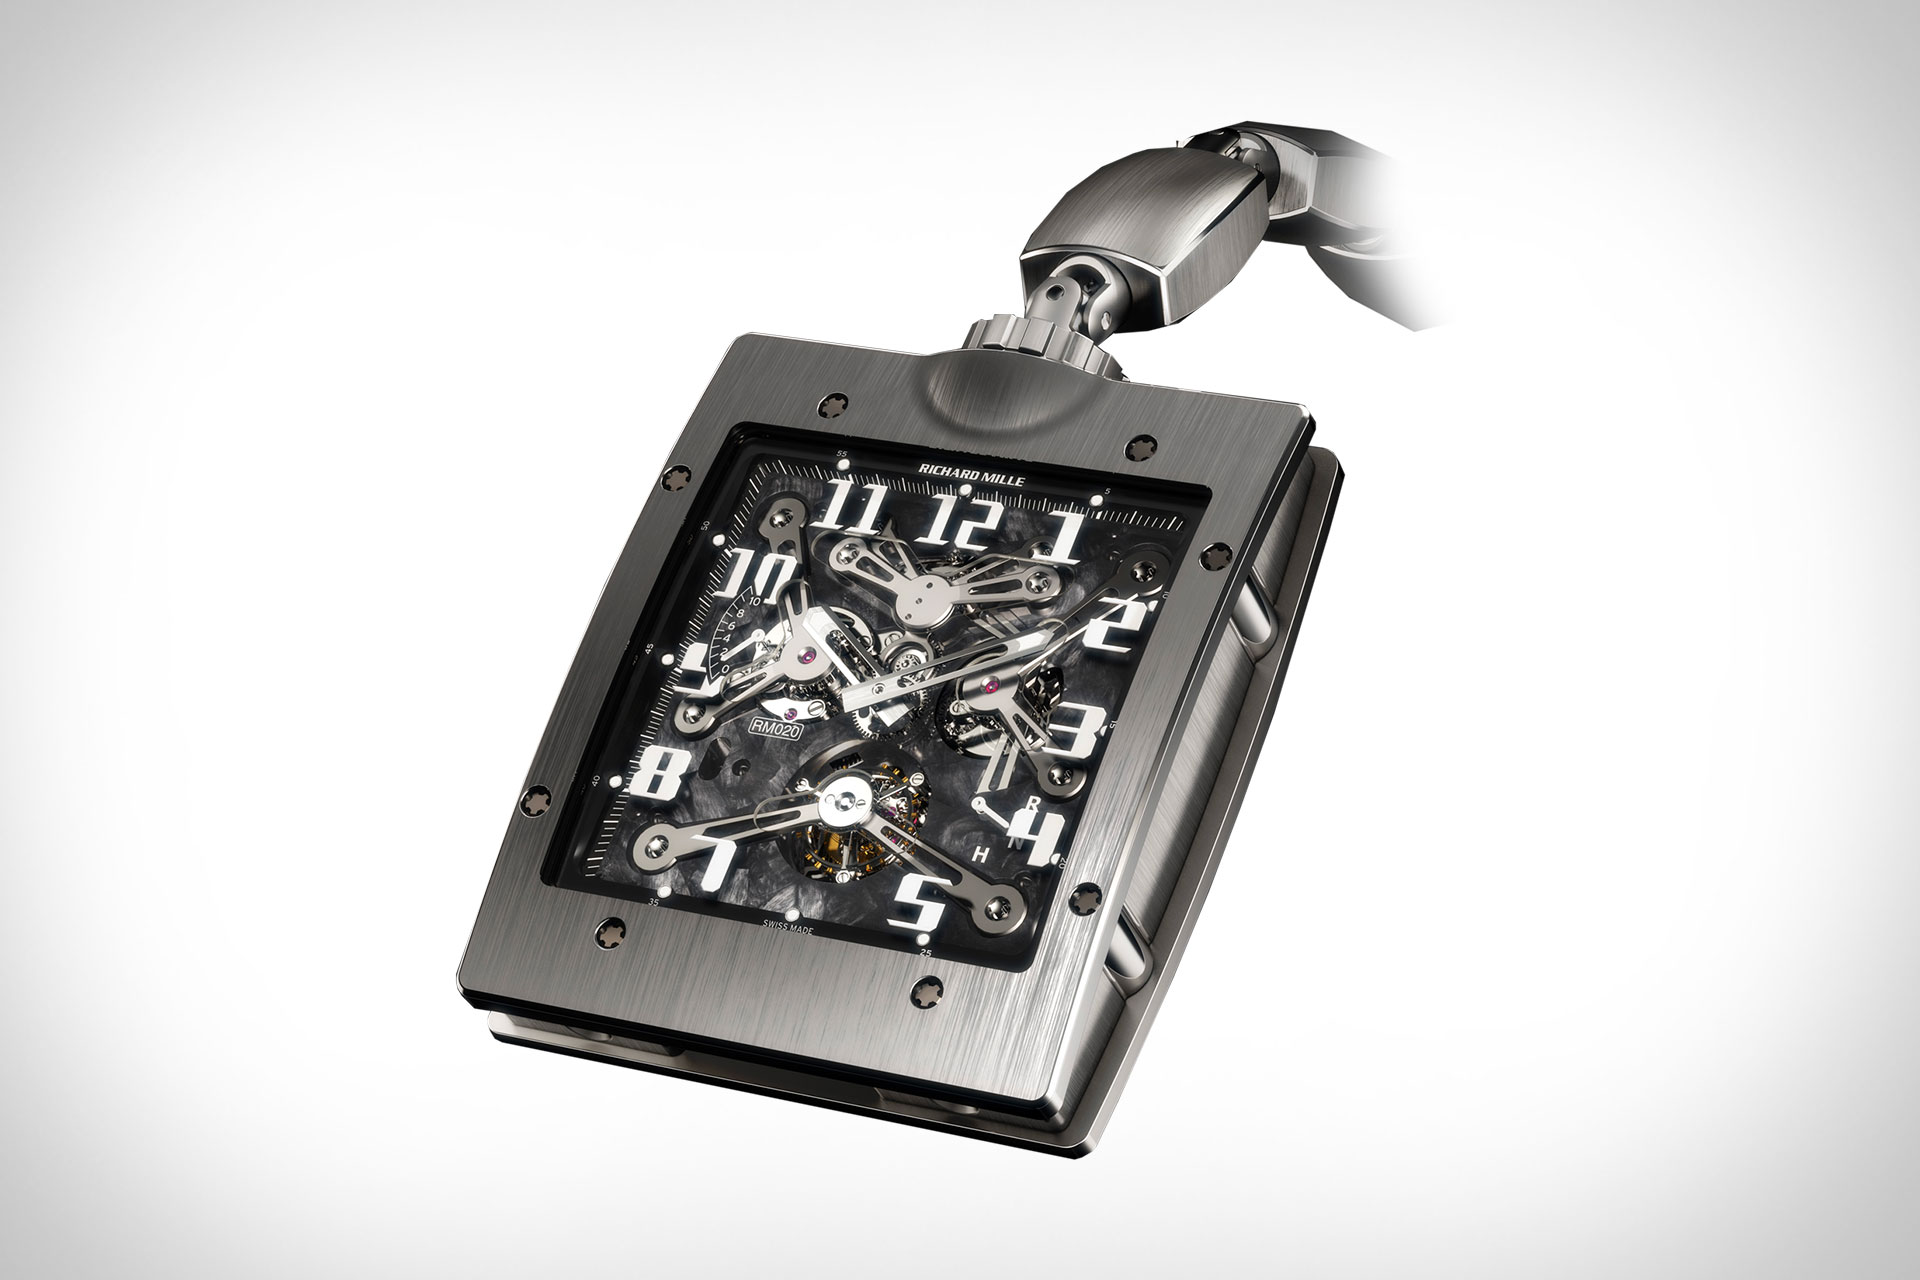 Карманные часы Richard Mille RM 020 с турбийоном